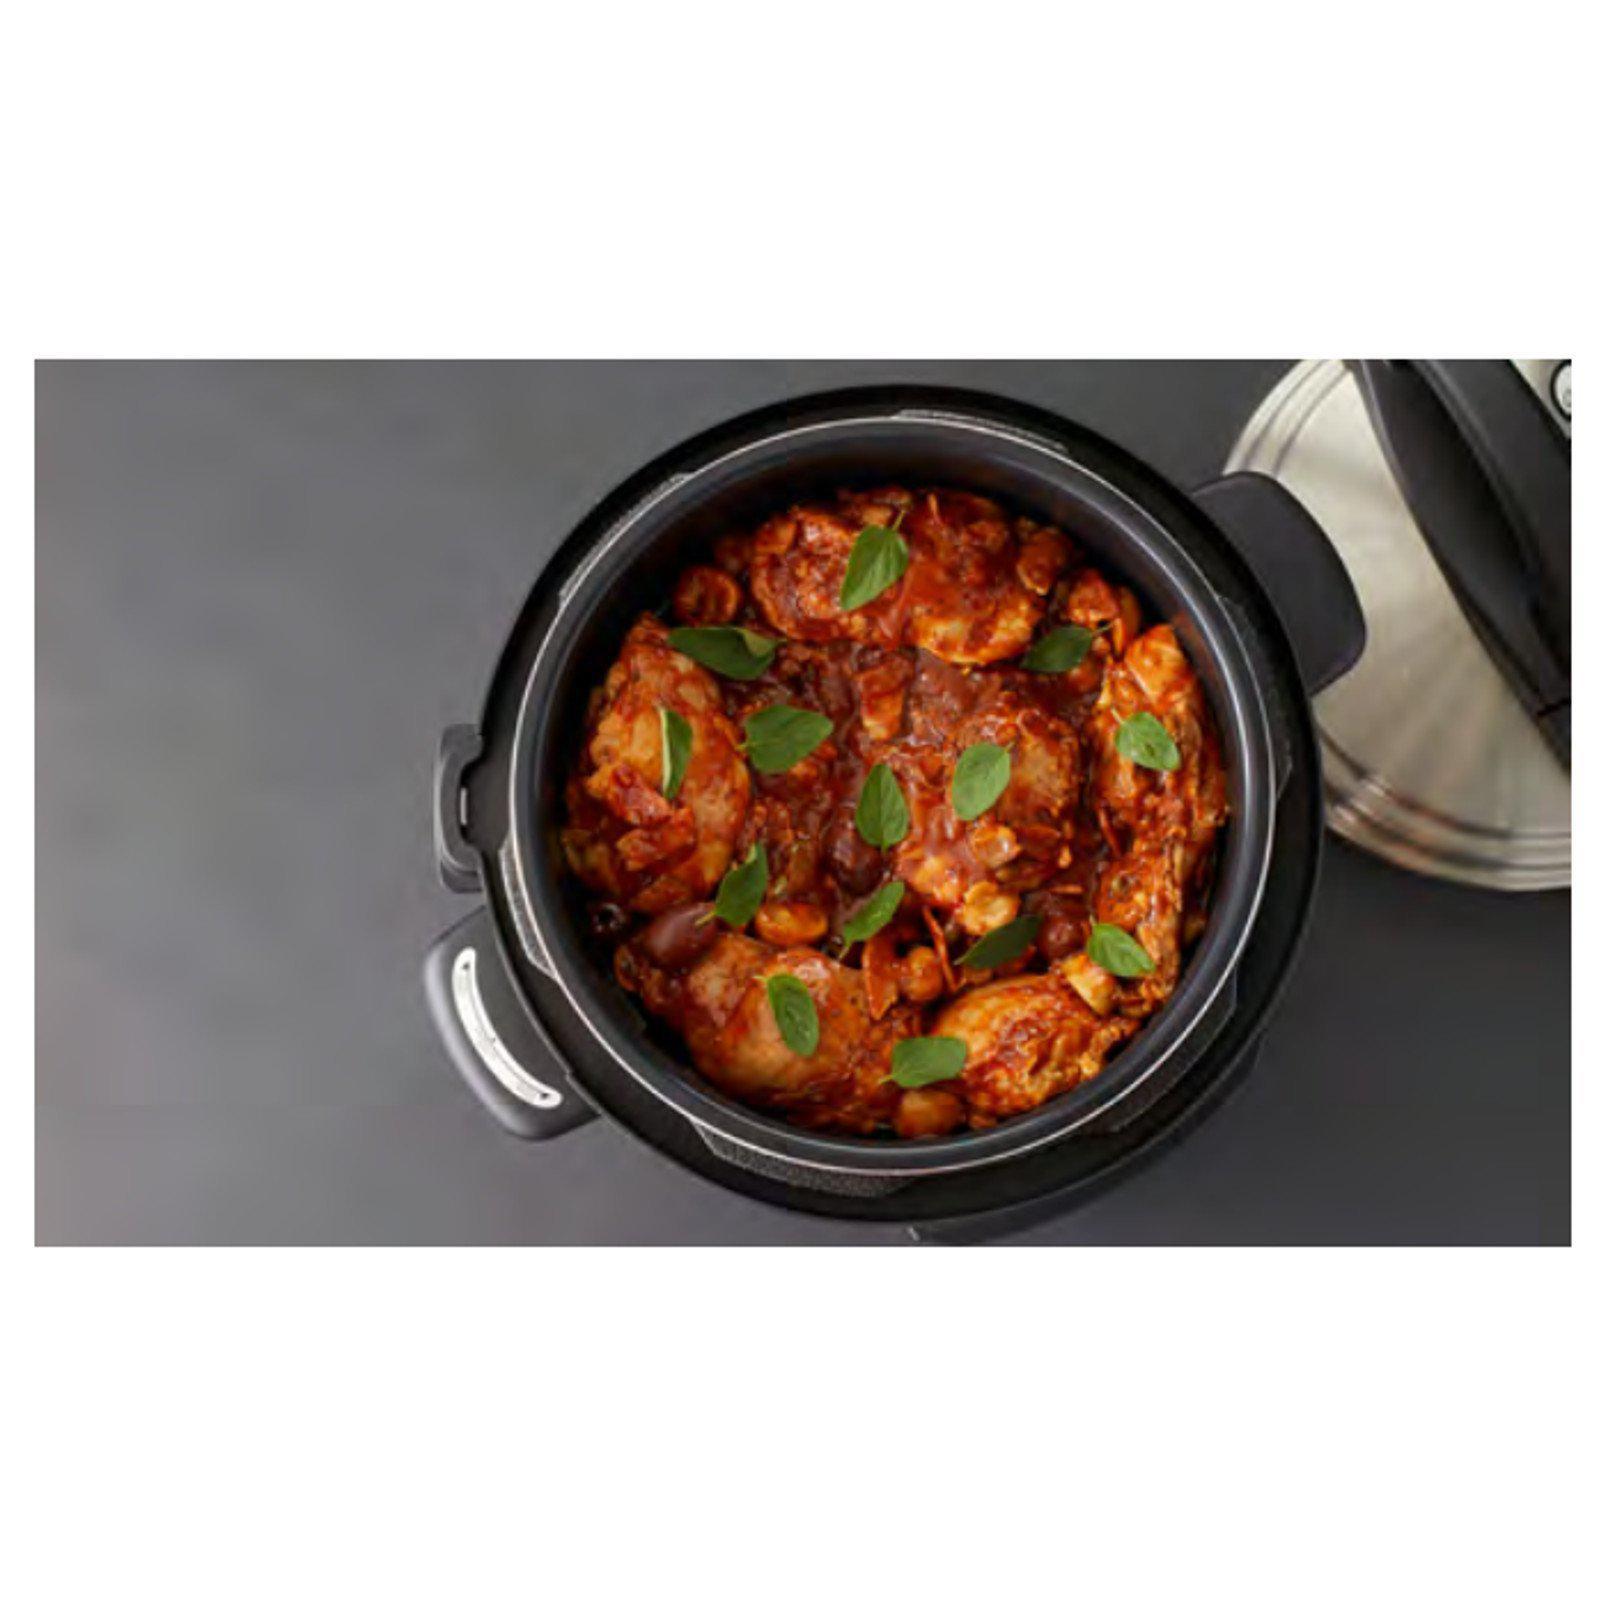 Masterpro 12 In 1 Multi Cooker-multi cooker-Chef's Quality Cookware